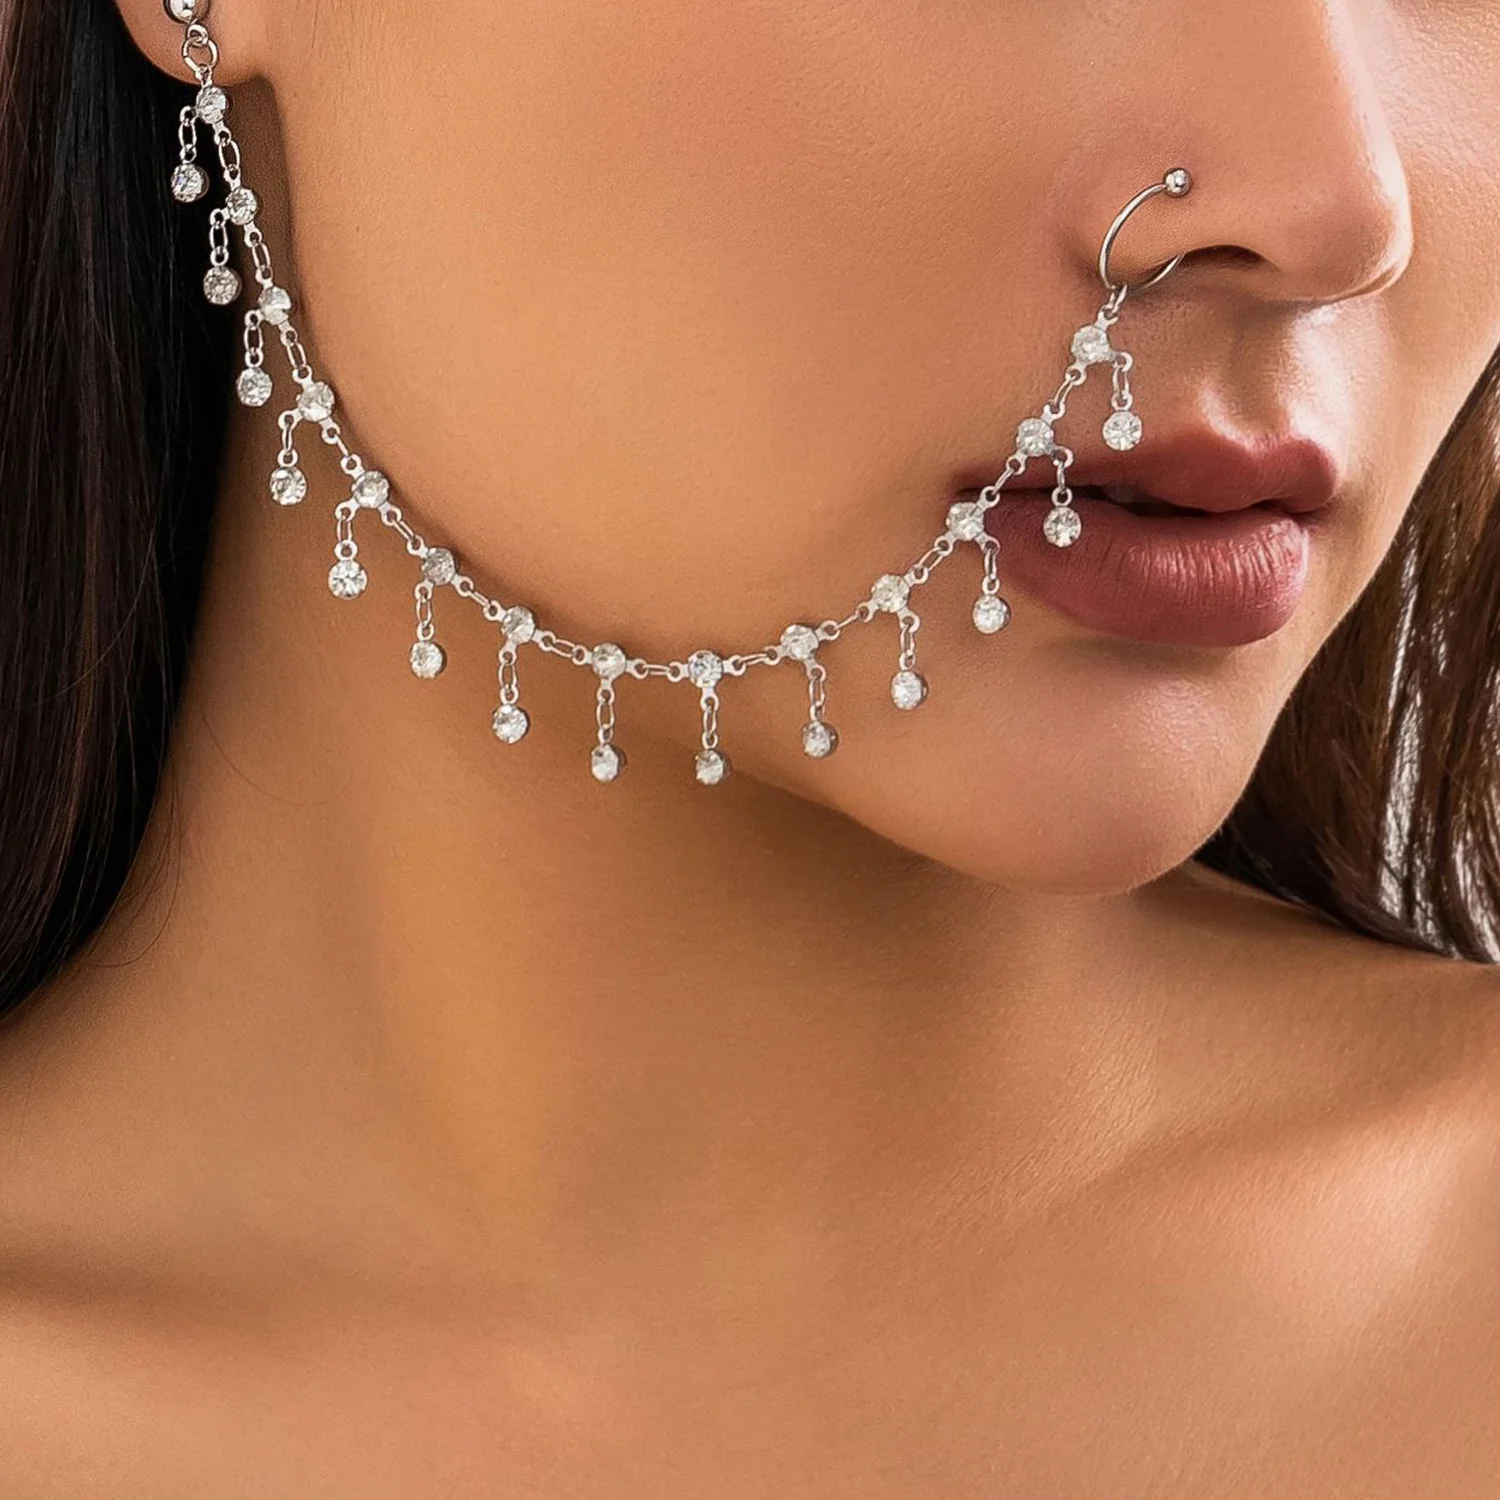 Elegant Fake Piercing Ear Nose Chain For Women Bohemia Tassel Chain Beads Long Tassel Chain Earrings Nose Ring Body Jewelry